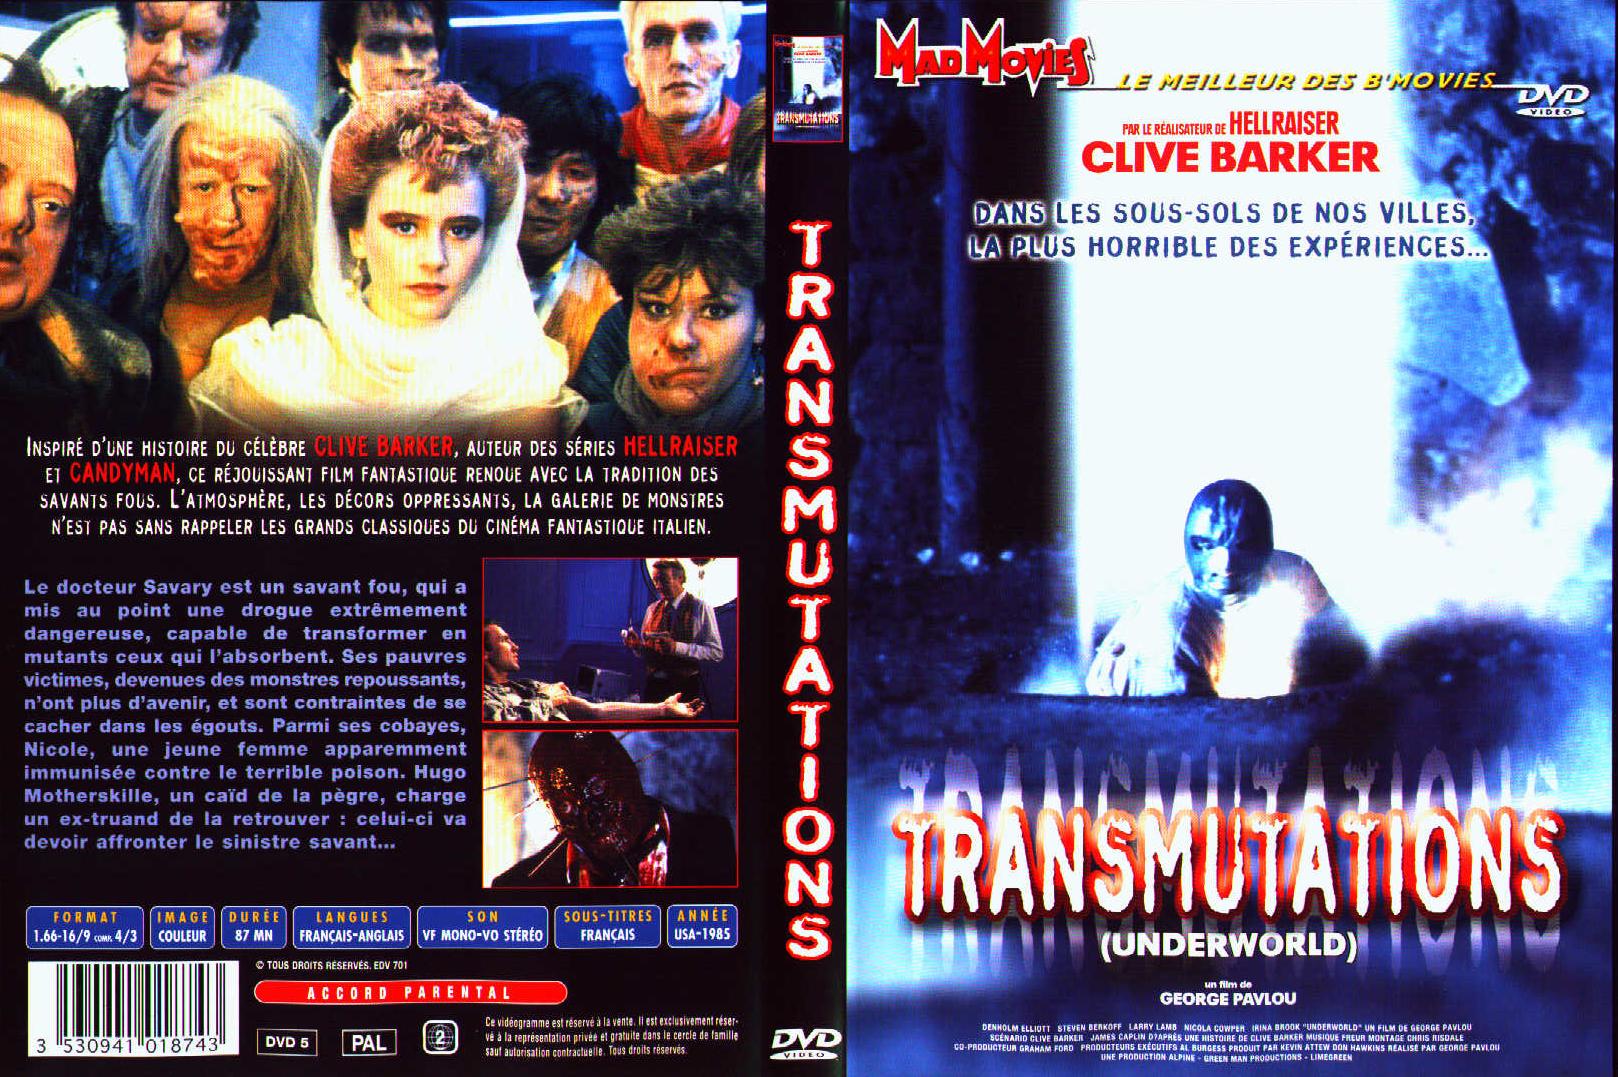 Jaquette DVD Transmutations